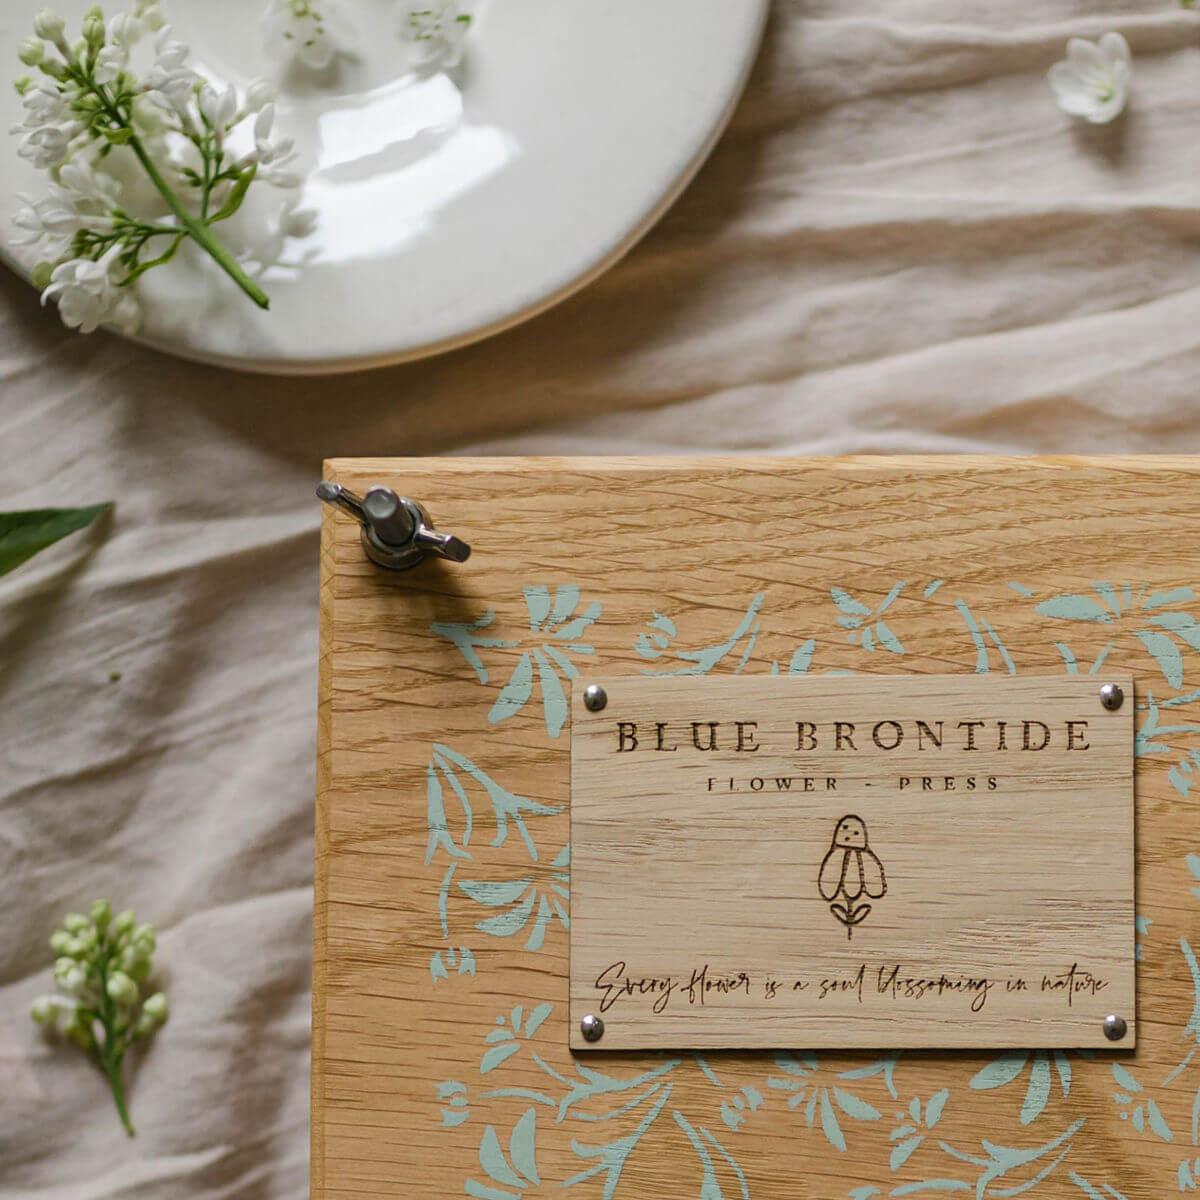 heirloom wooden flower press flower presses at blue brontide uk